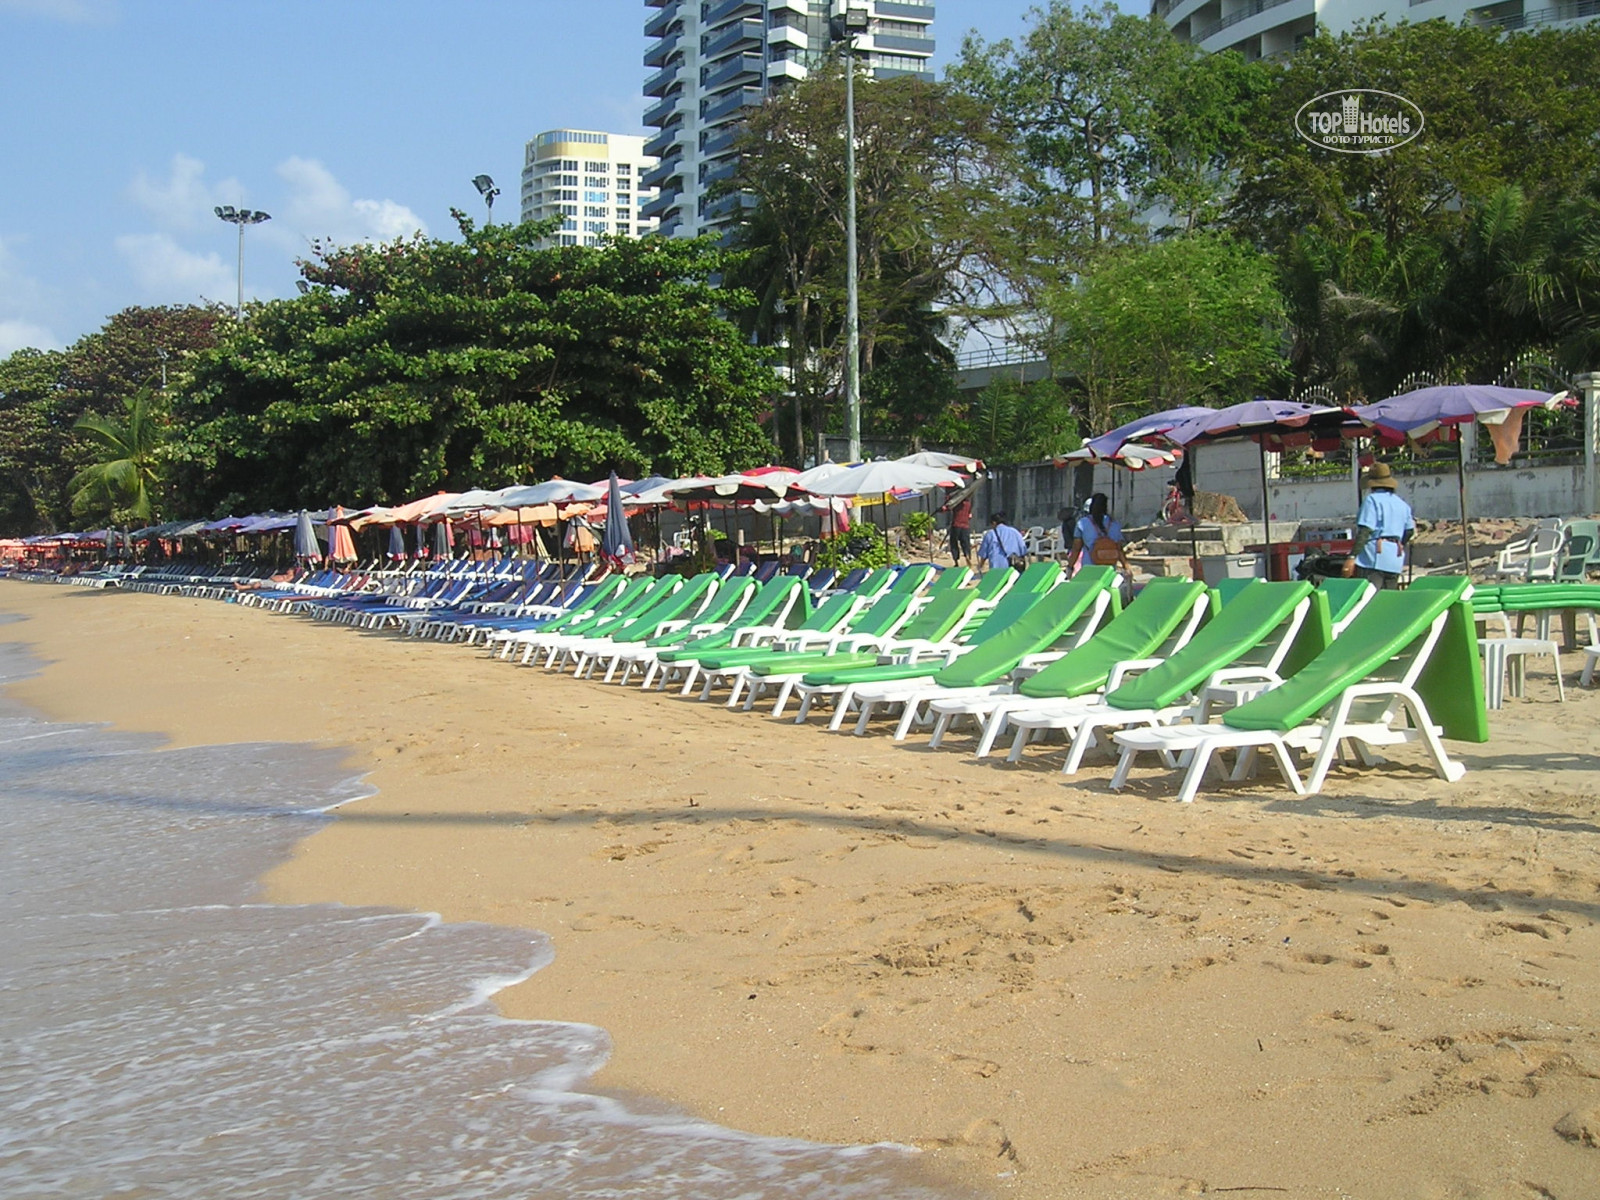 отель pattaya park beach resort